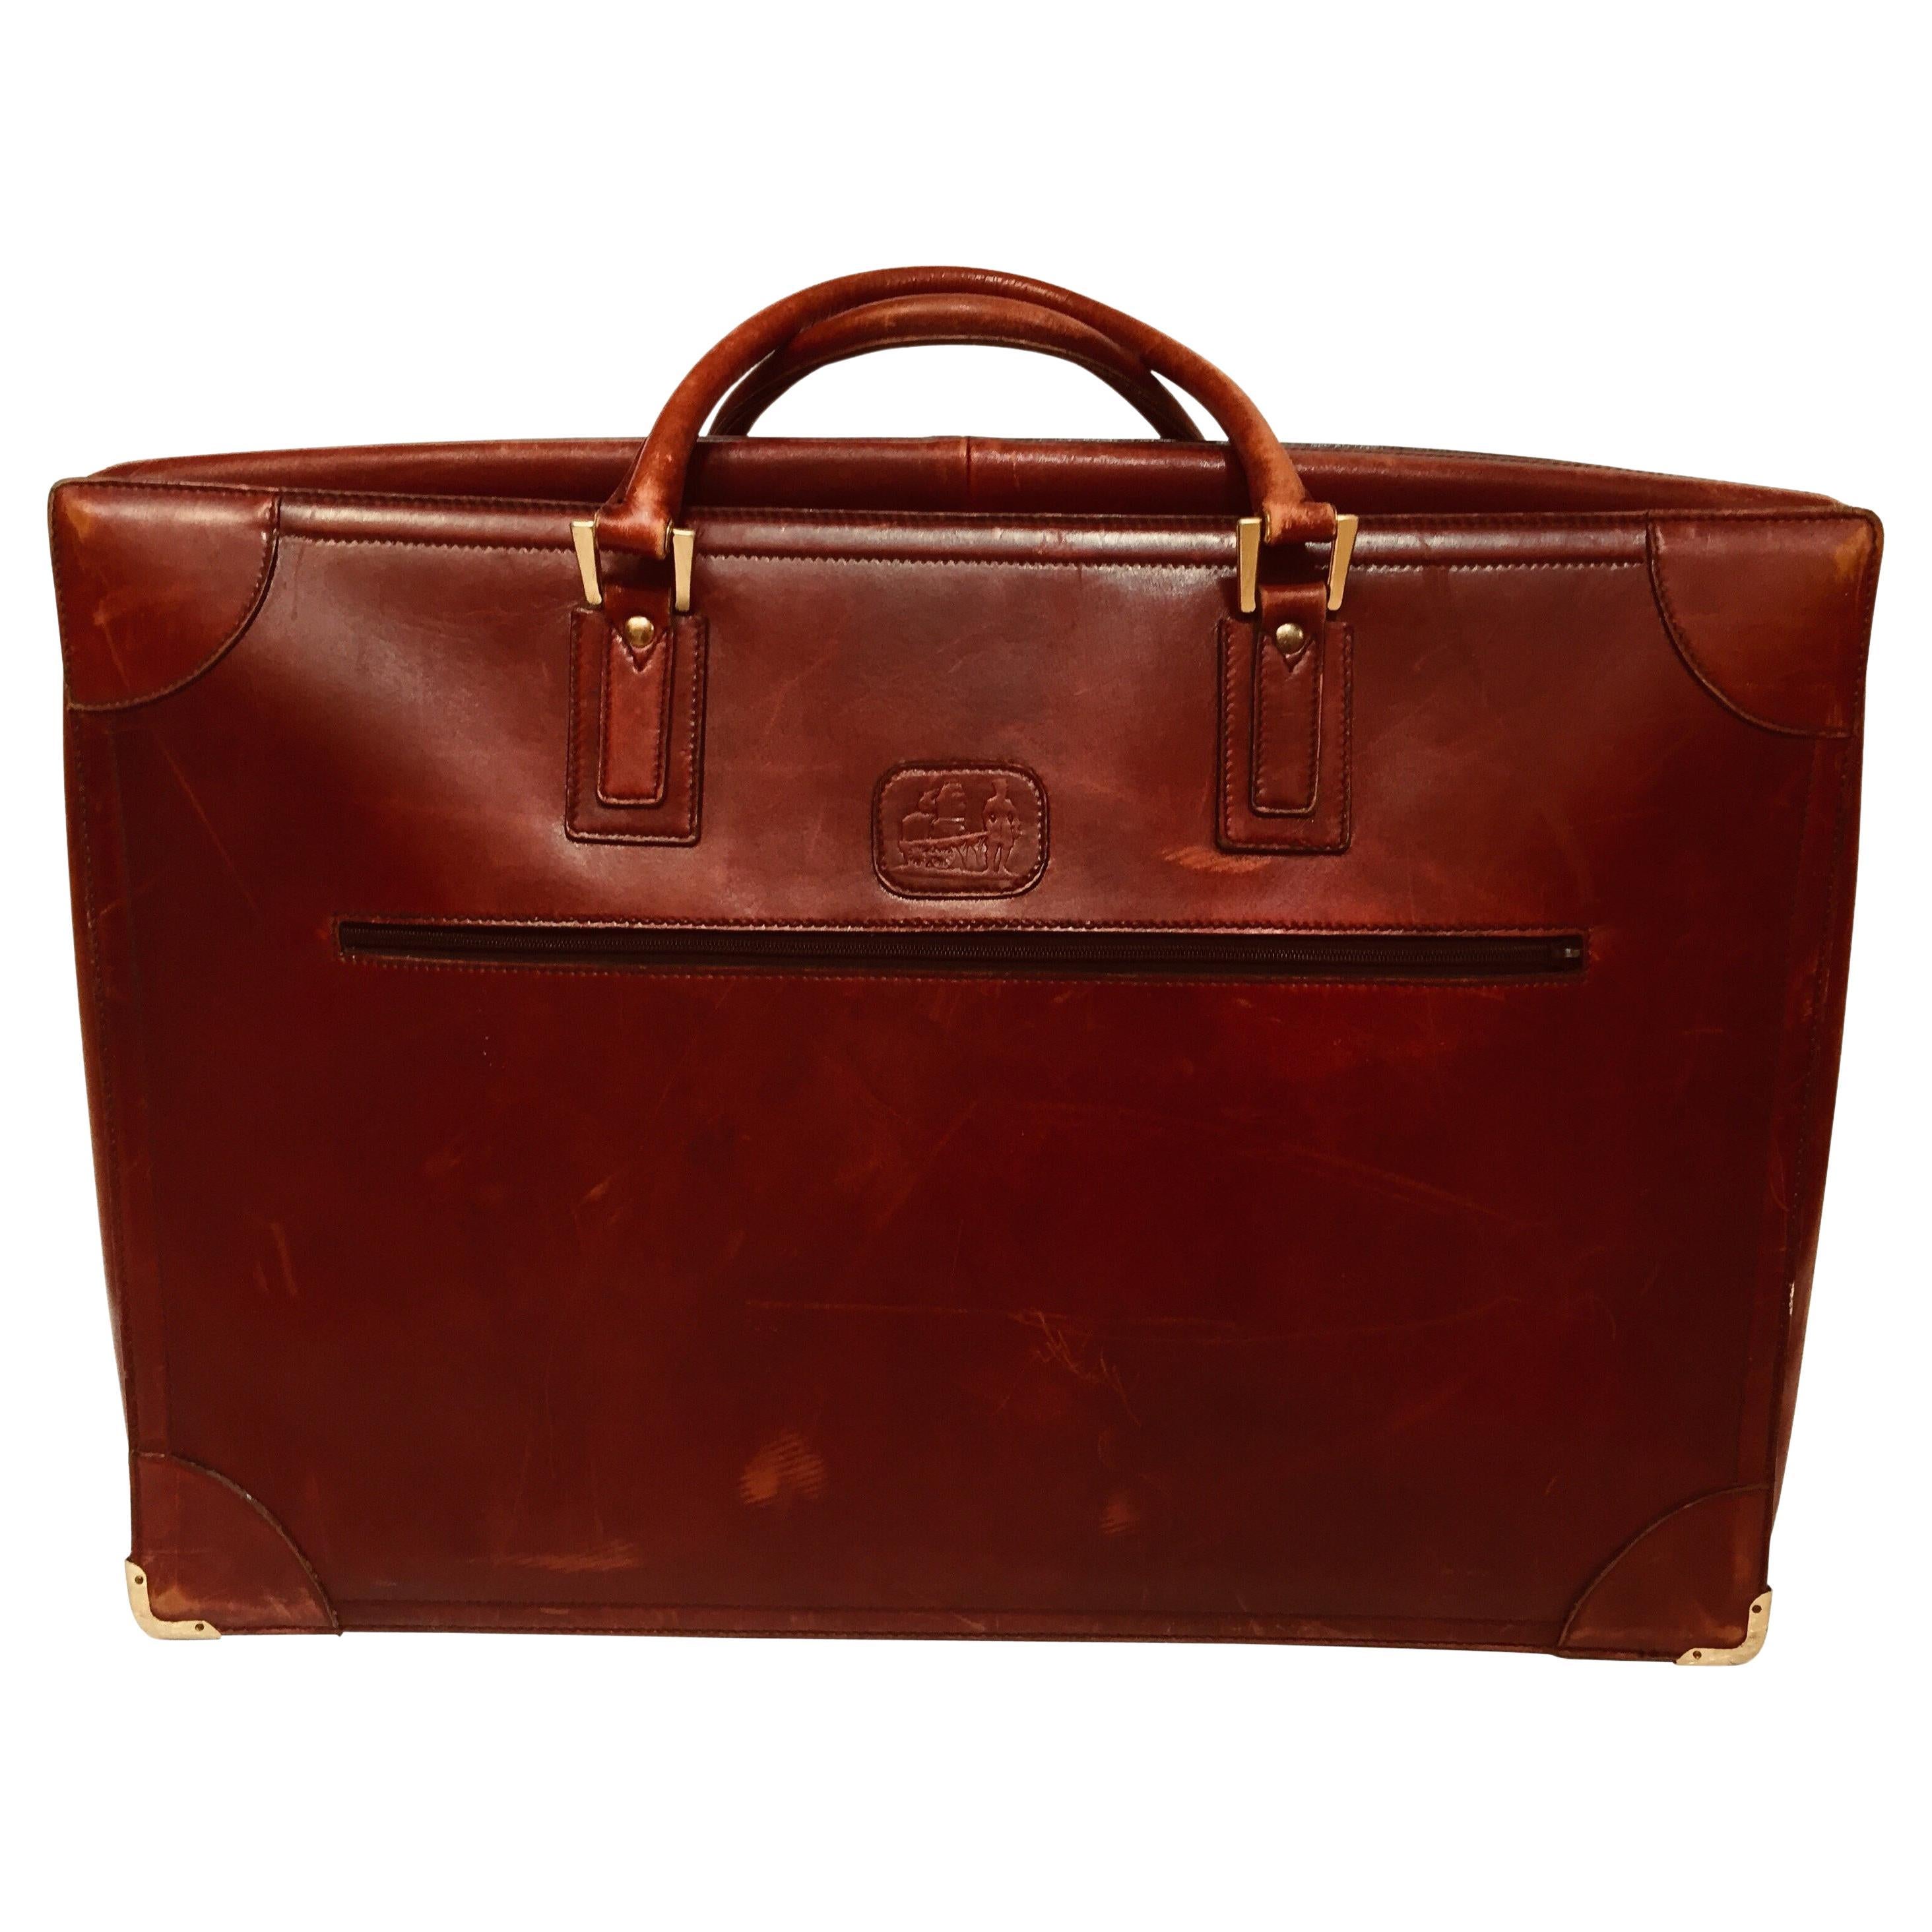 Vintage-Gepäcktasche aus Leder „La Bagagerie Paris“ in Burgunderrot und Bordeaux